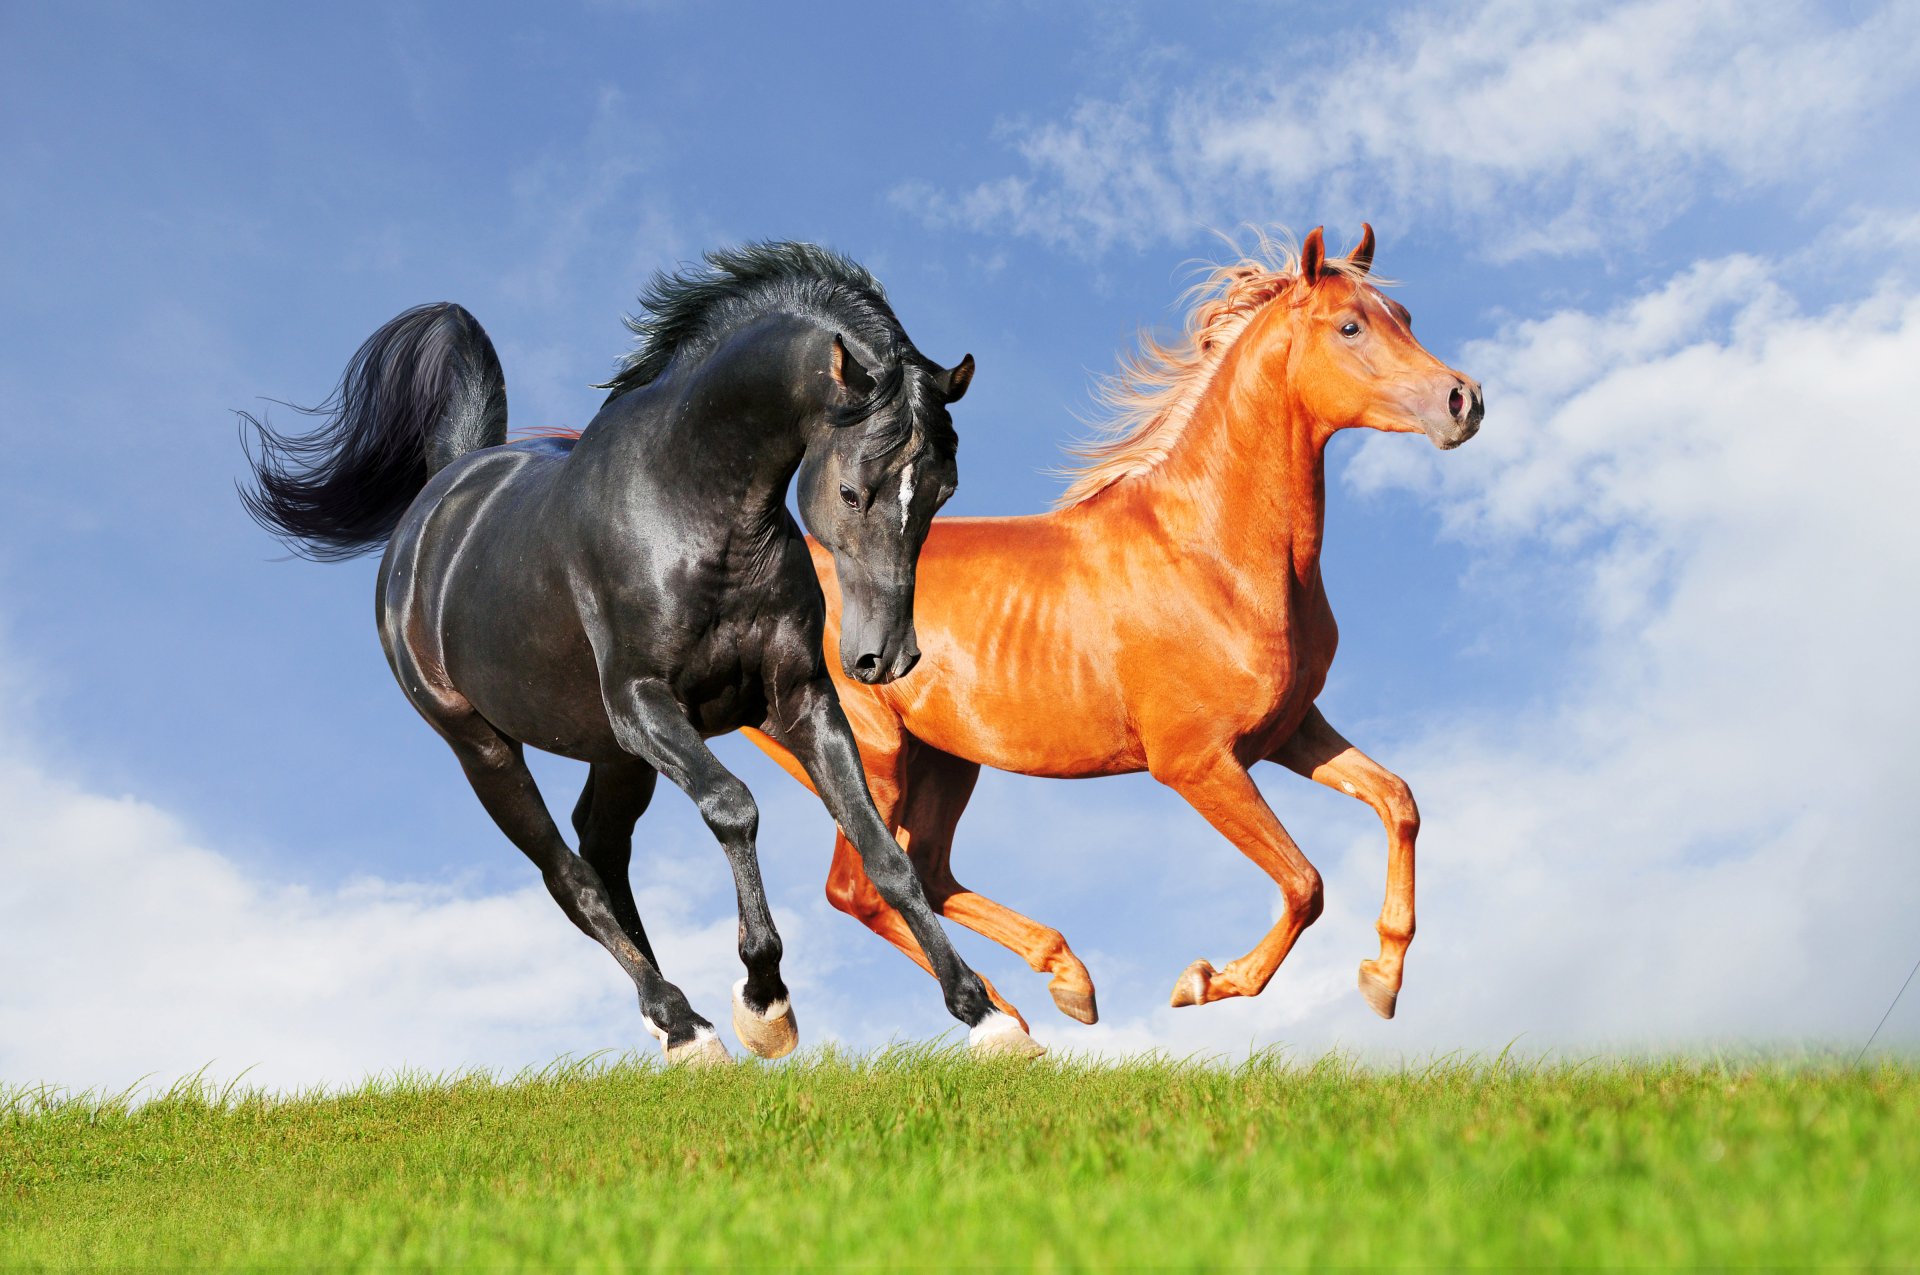 horses running in a field